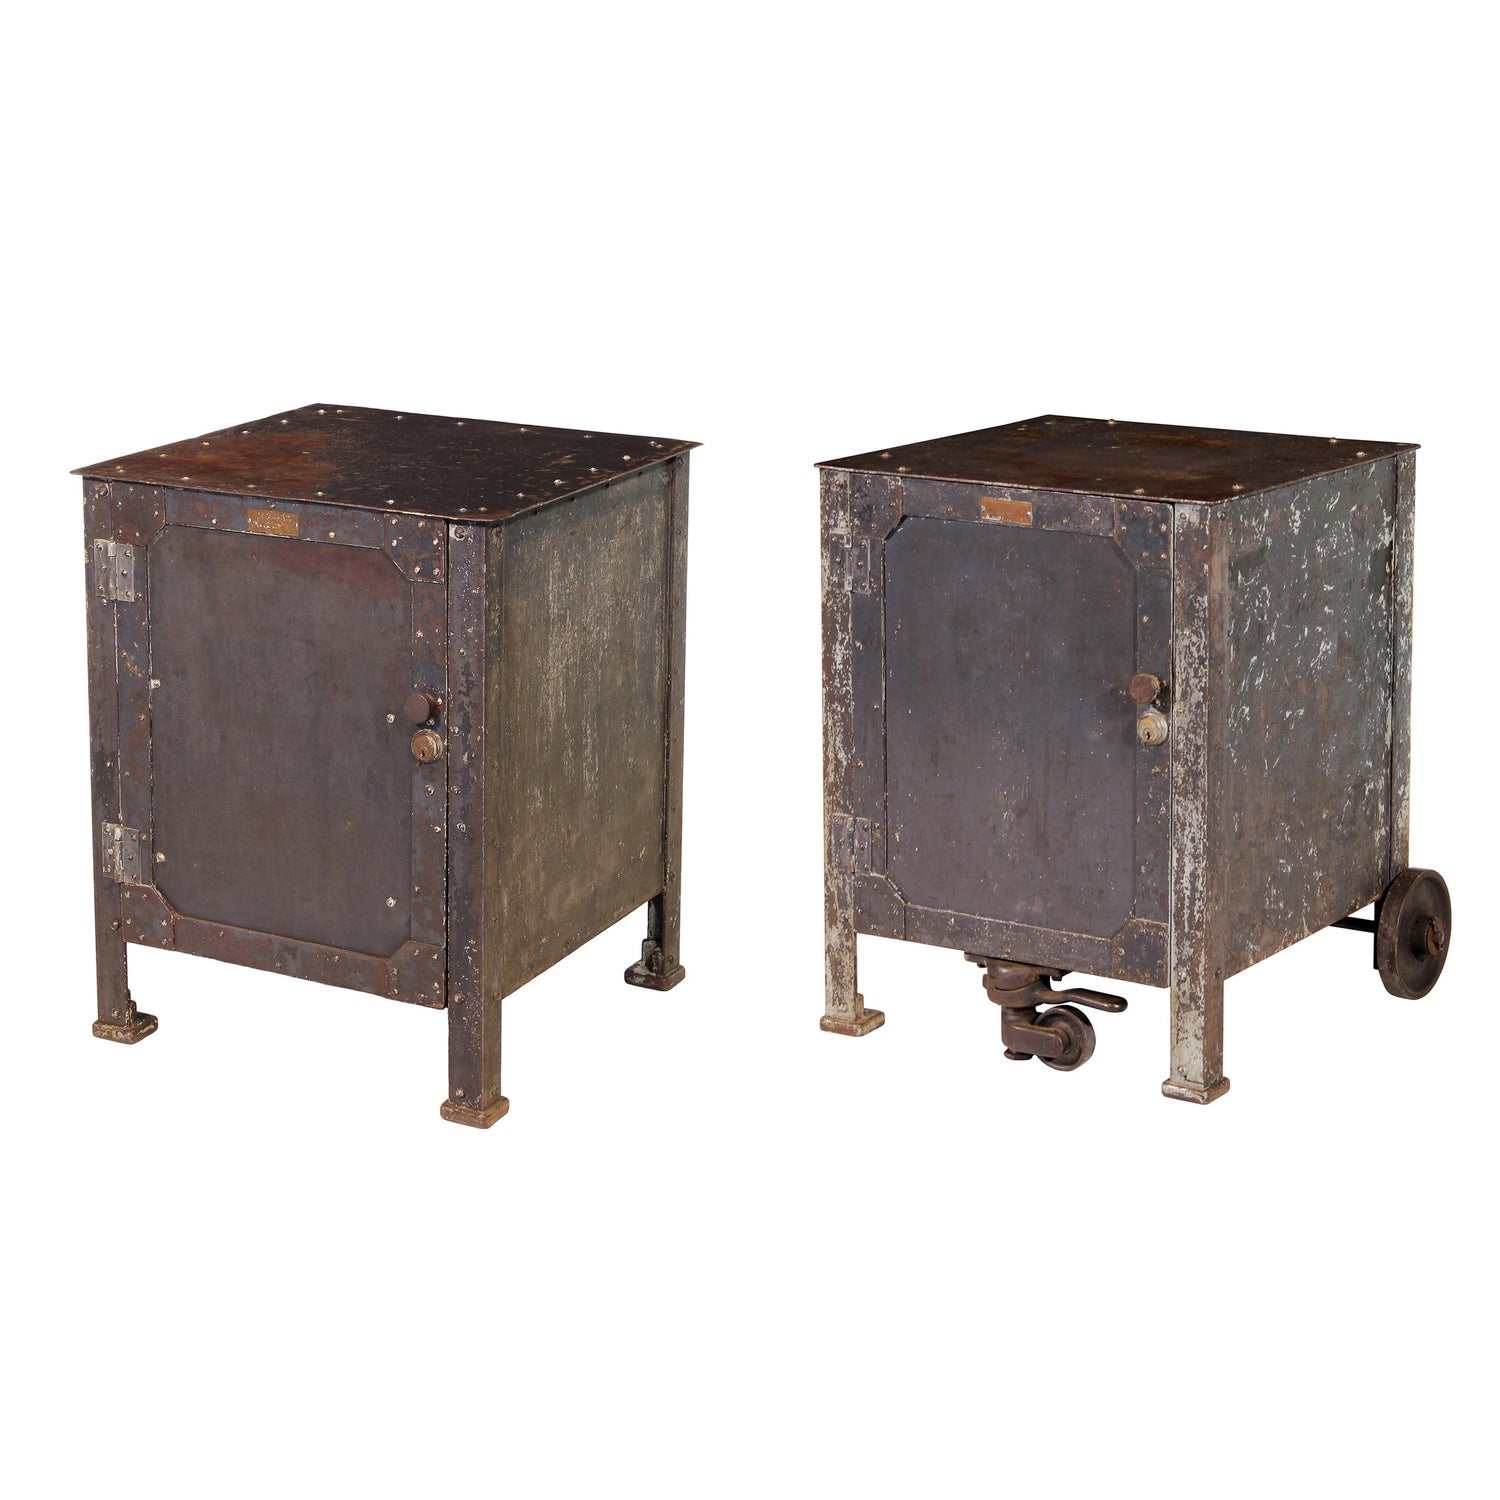 Pair Of Vintage Industrial Bedside Tables Nightstands For Sale At 1stdibs